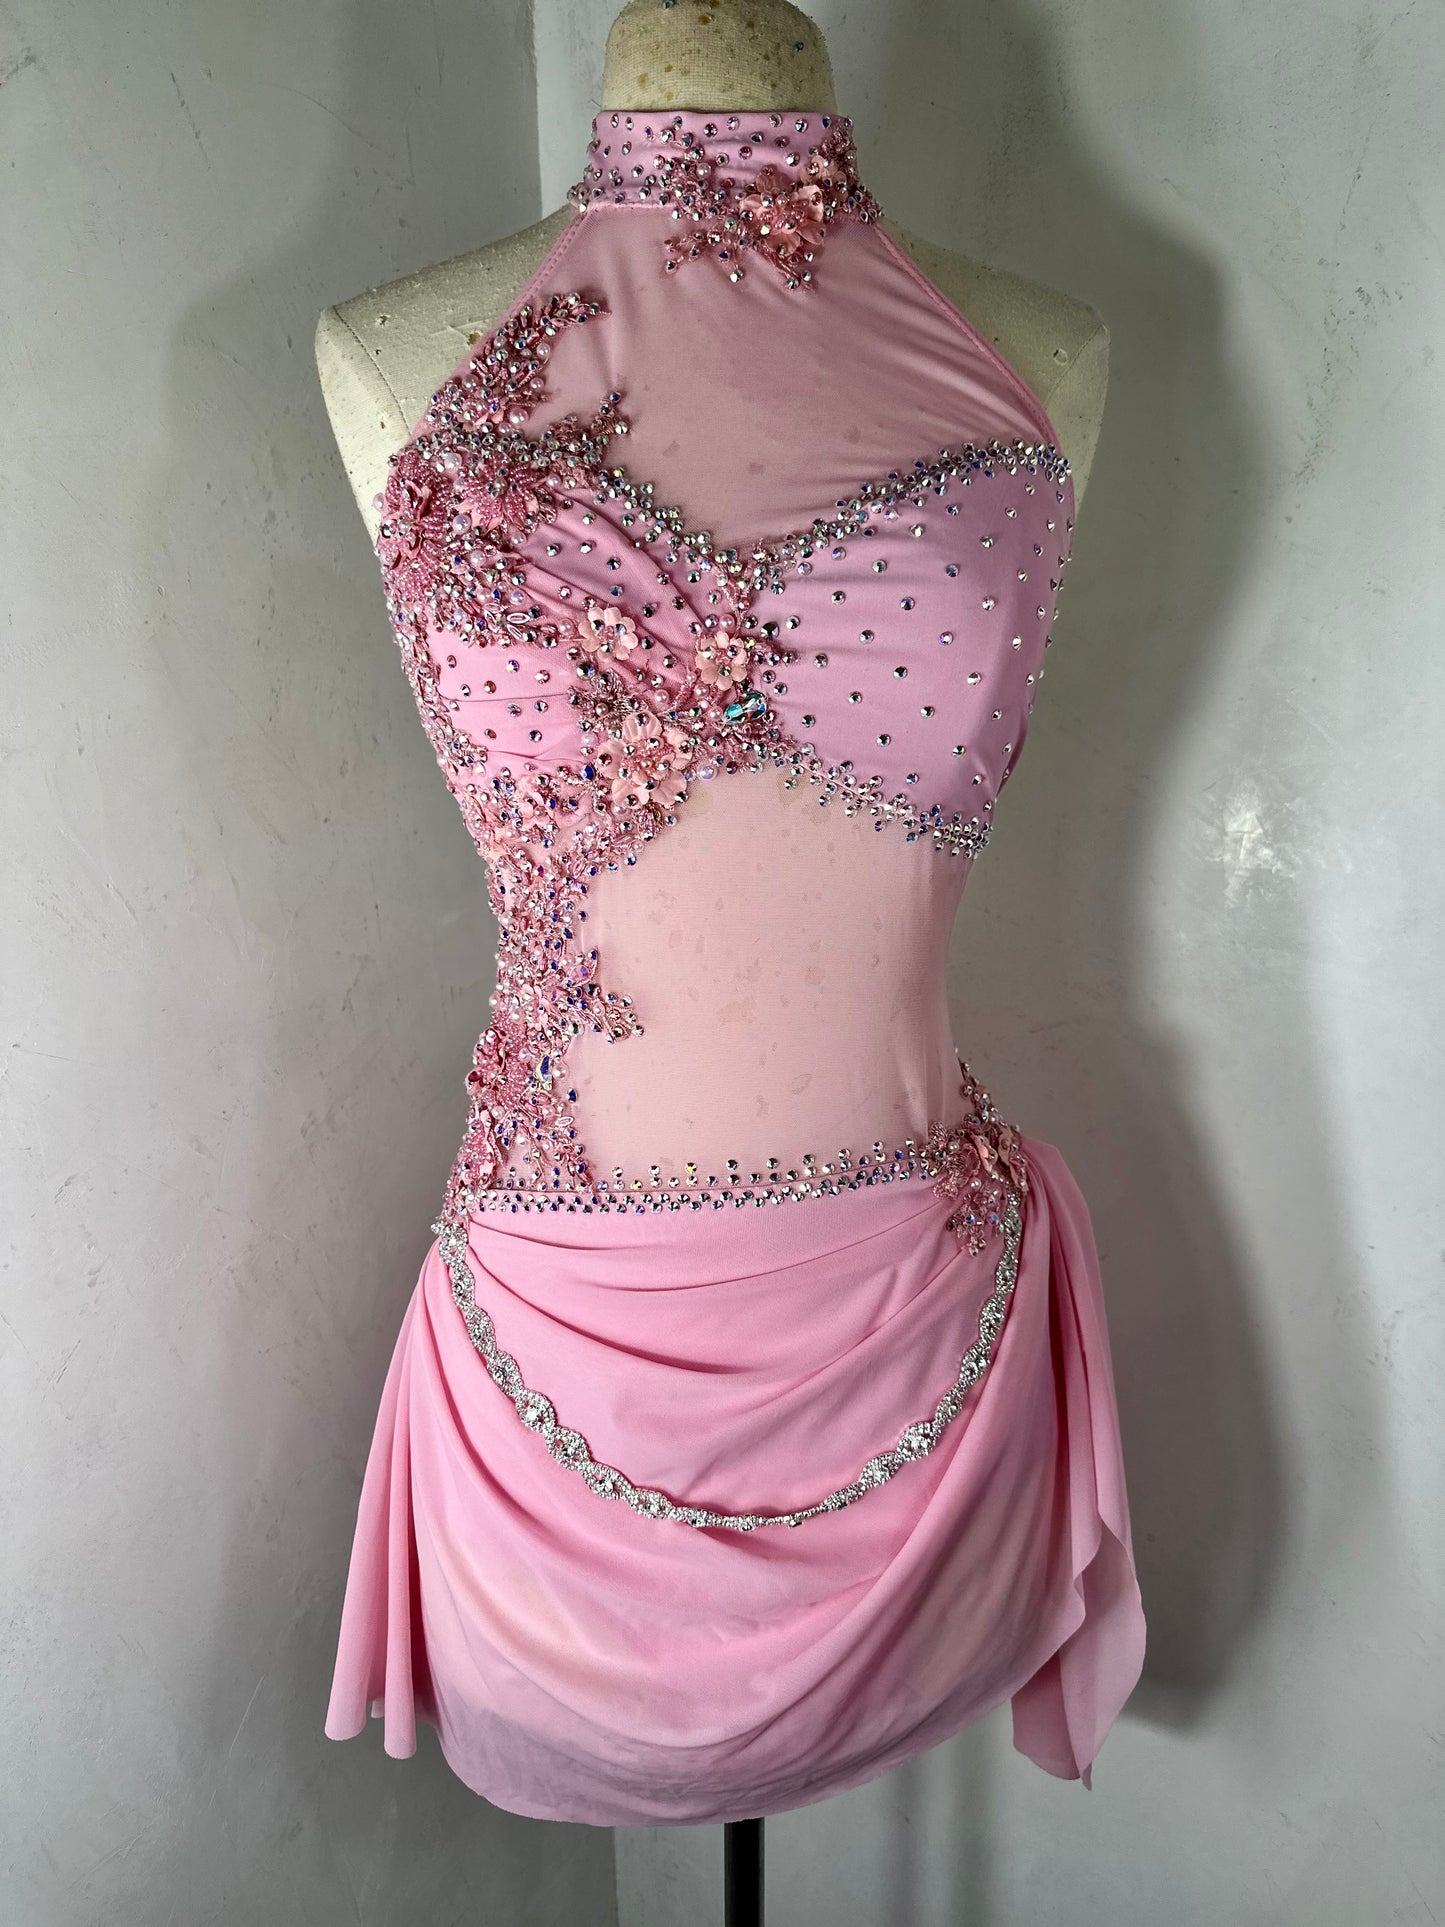 VENUS pink lyrical dance dance costume